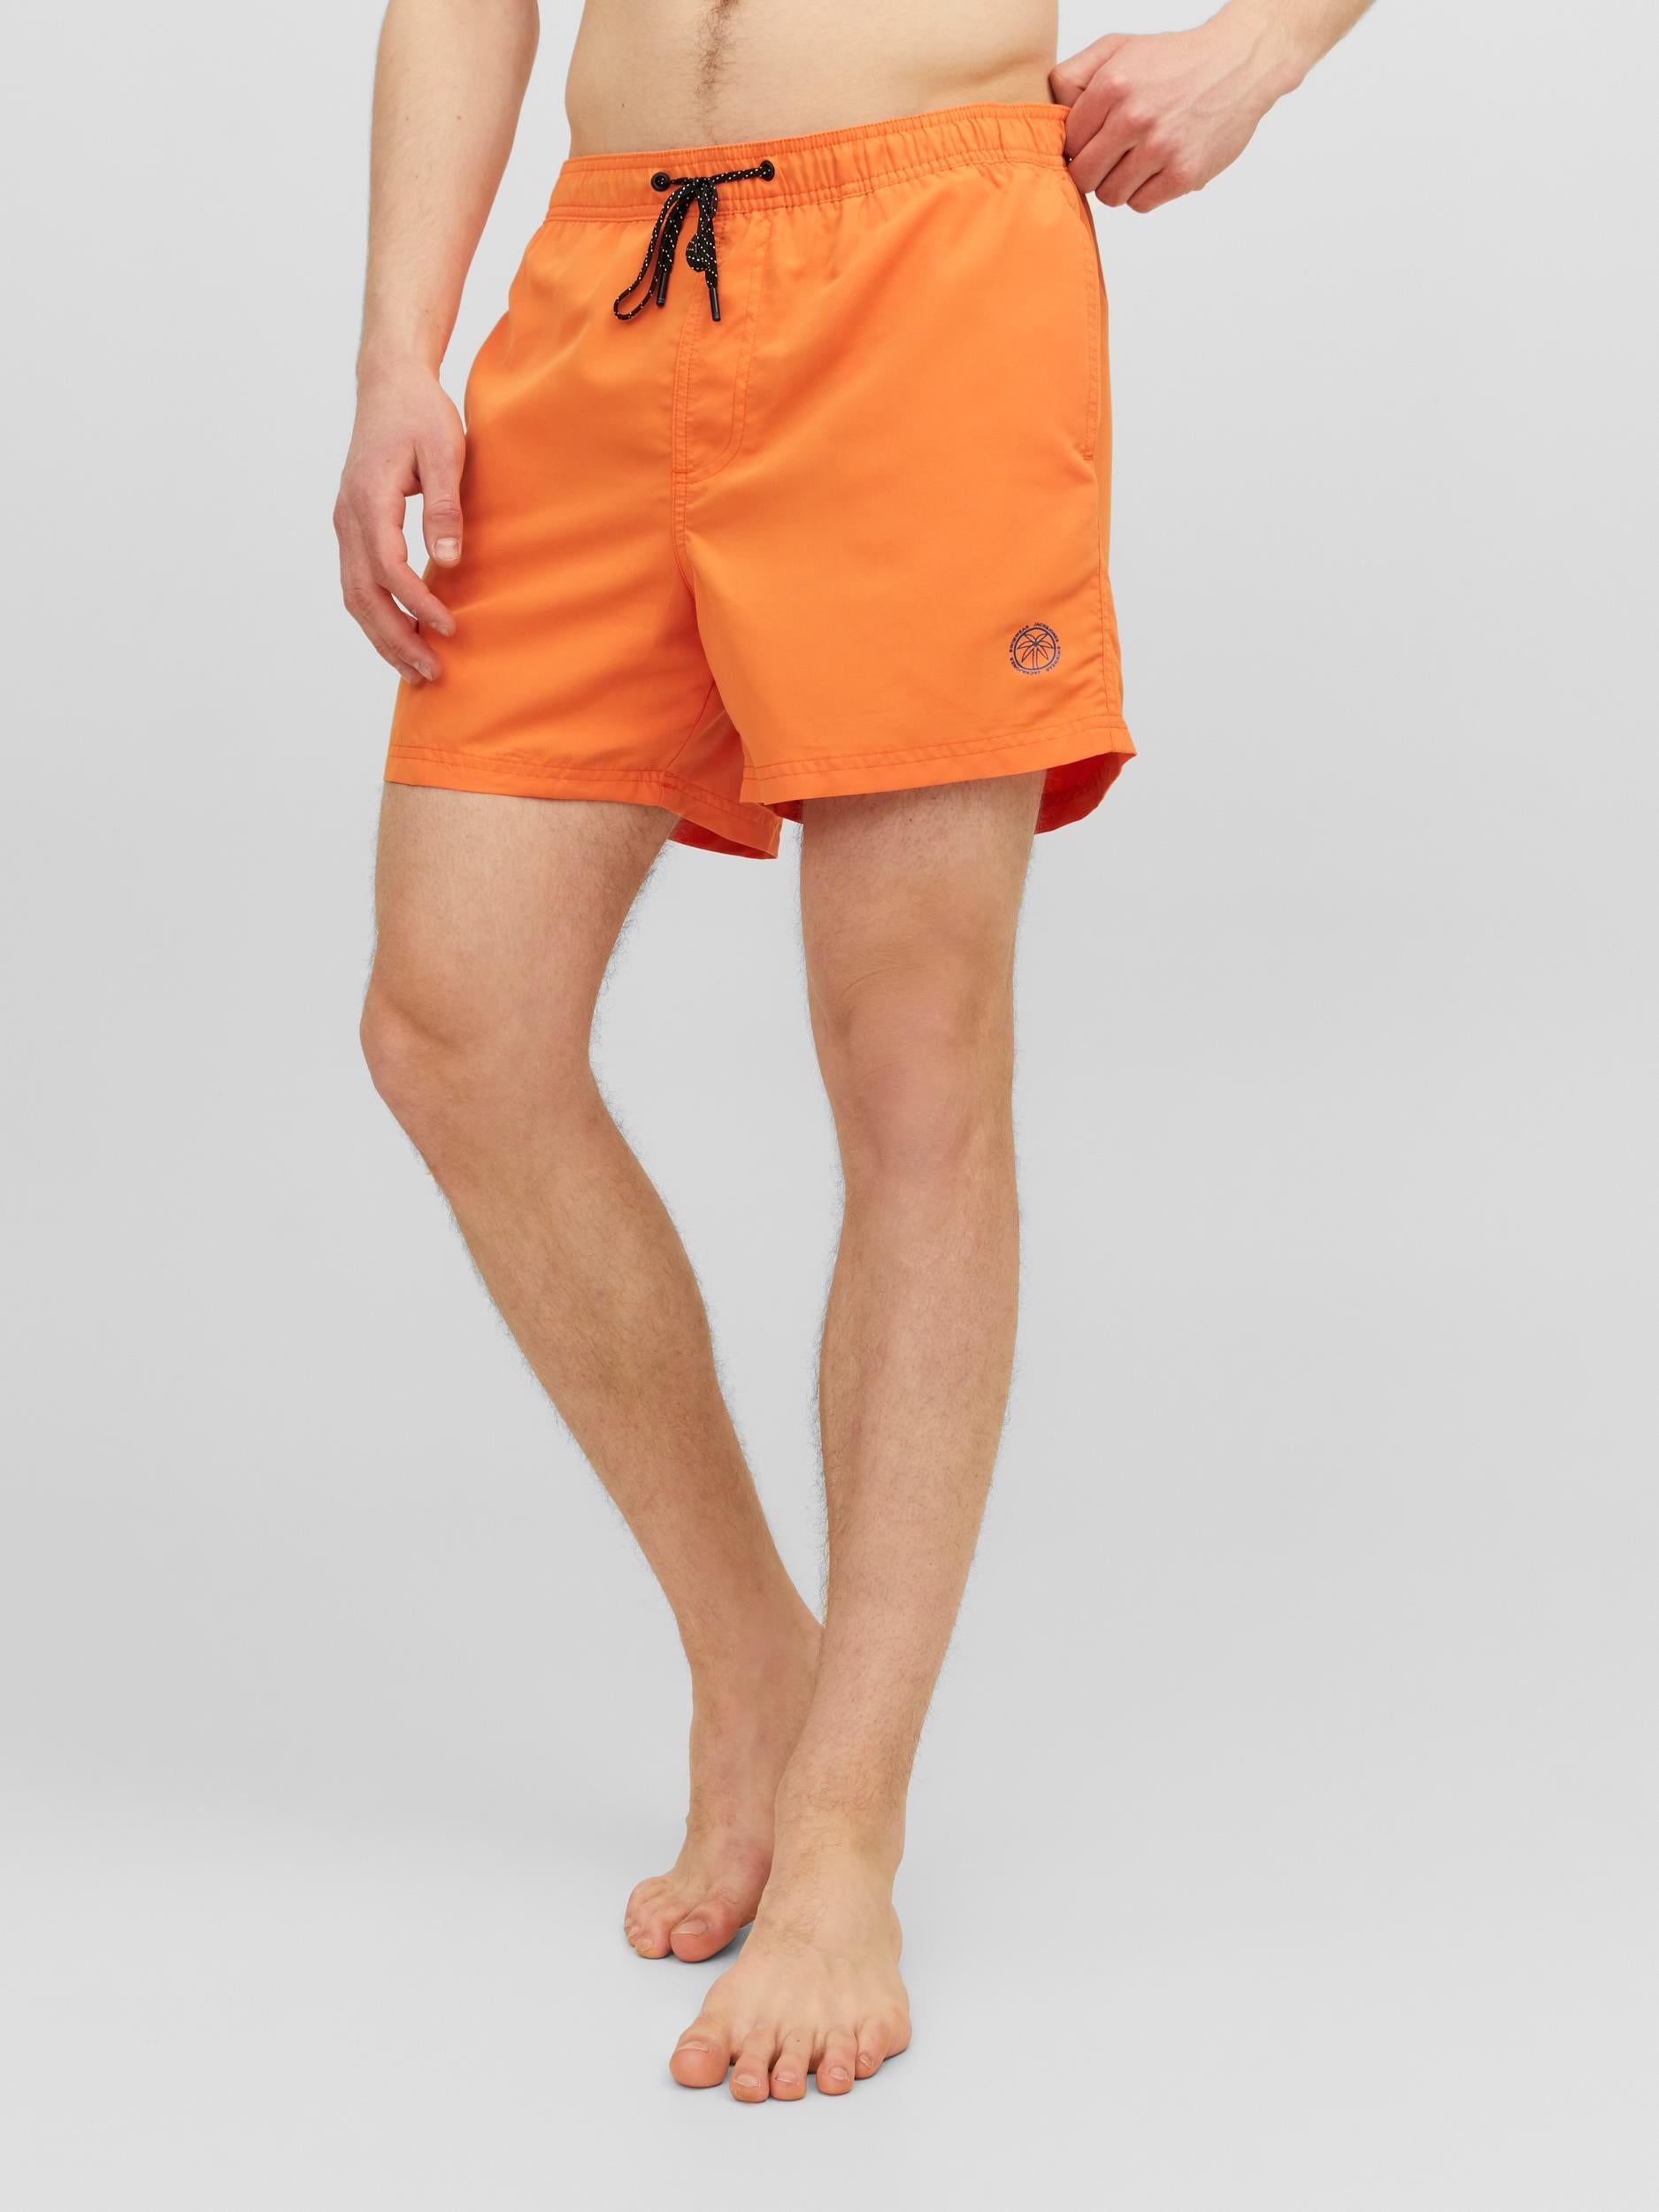 Jack&amp;Jones orange short swimsuit